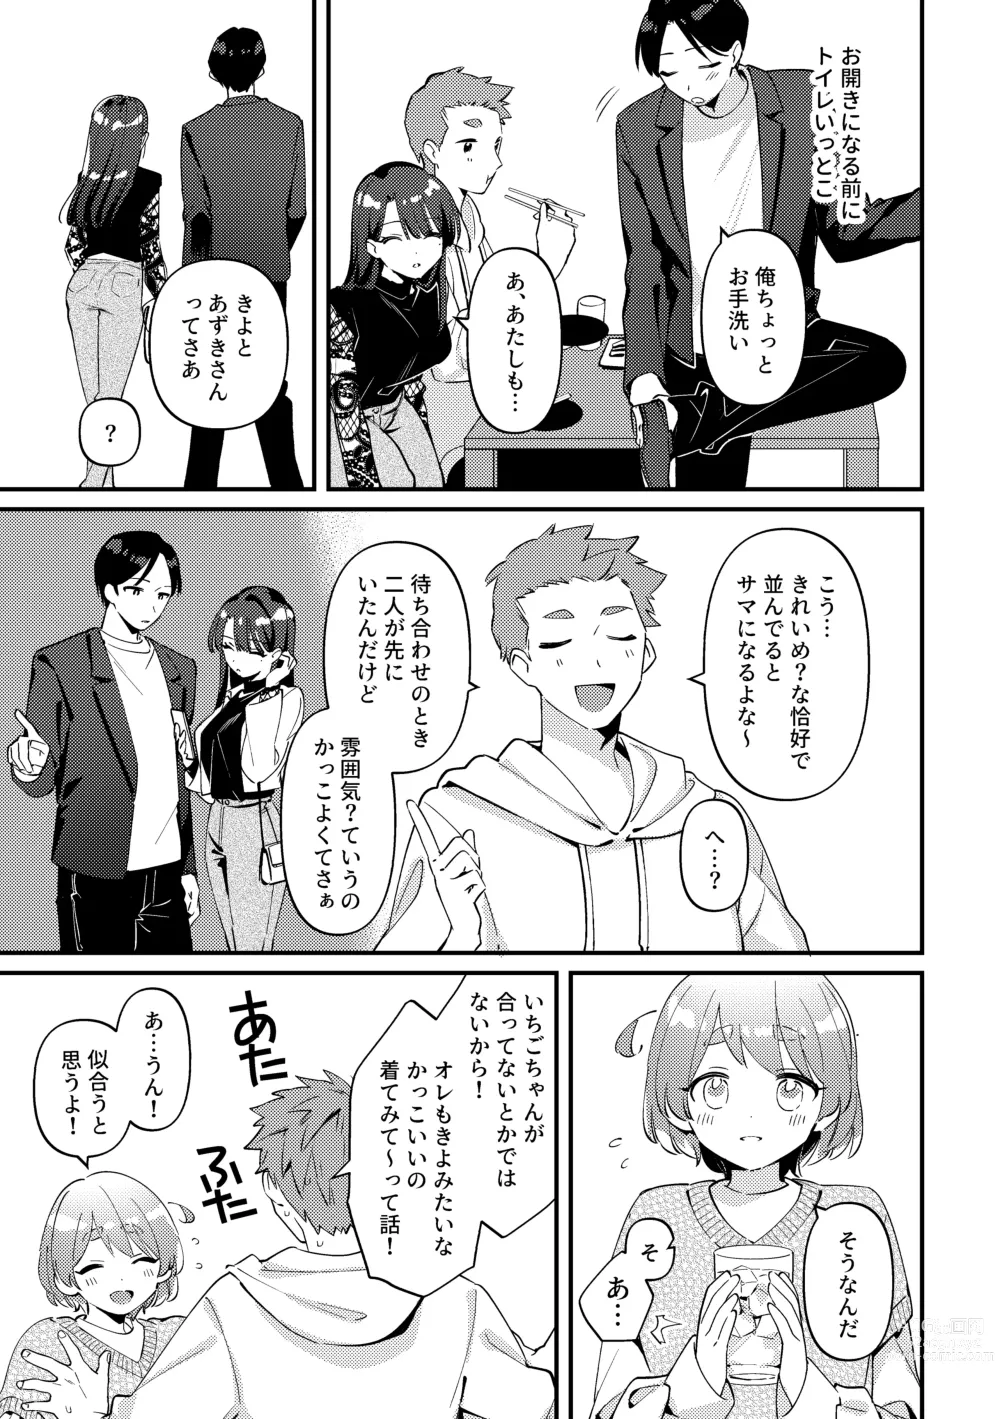 Page 6 of doujinshi Yakimo Chikanoji Yonowagamama Kai